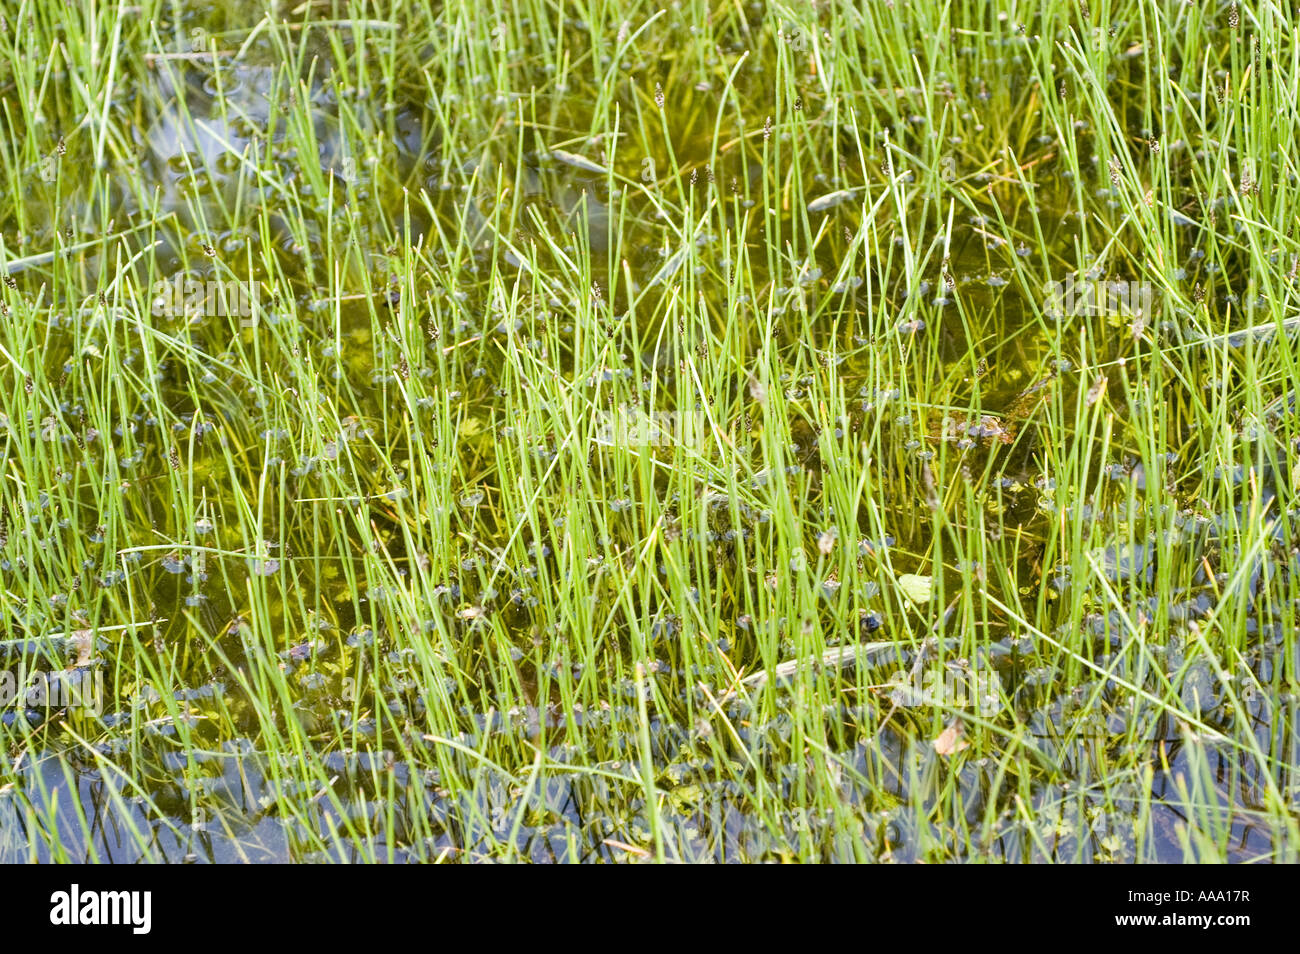 Water plant - common spikerush - Cyperaceae - Eleocharis Palustris Stock Photo